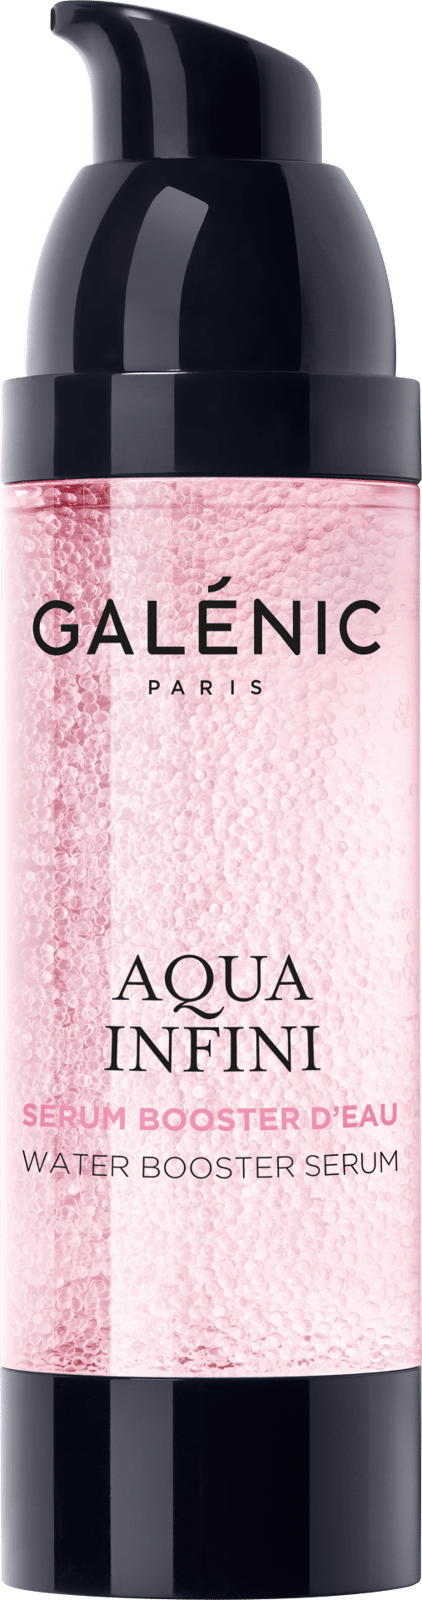 Galénic Aqua Infini Water Booster Serum 30ml (1.01fl oz)